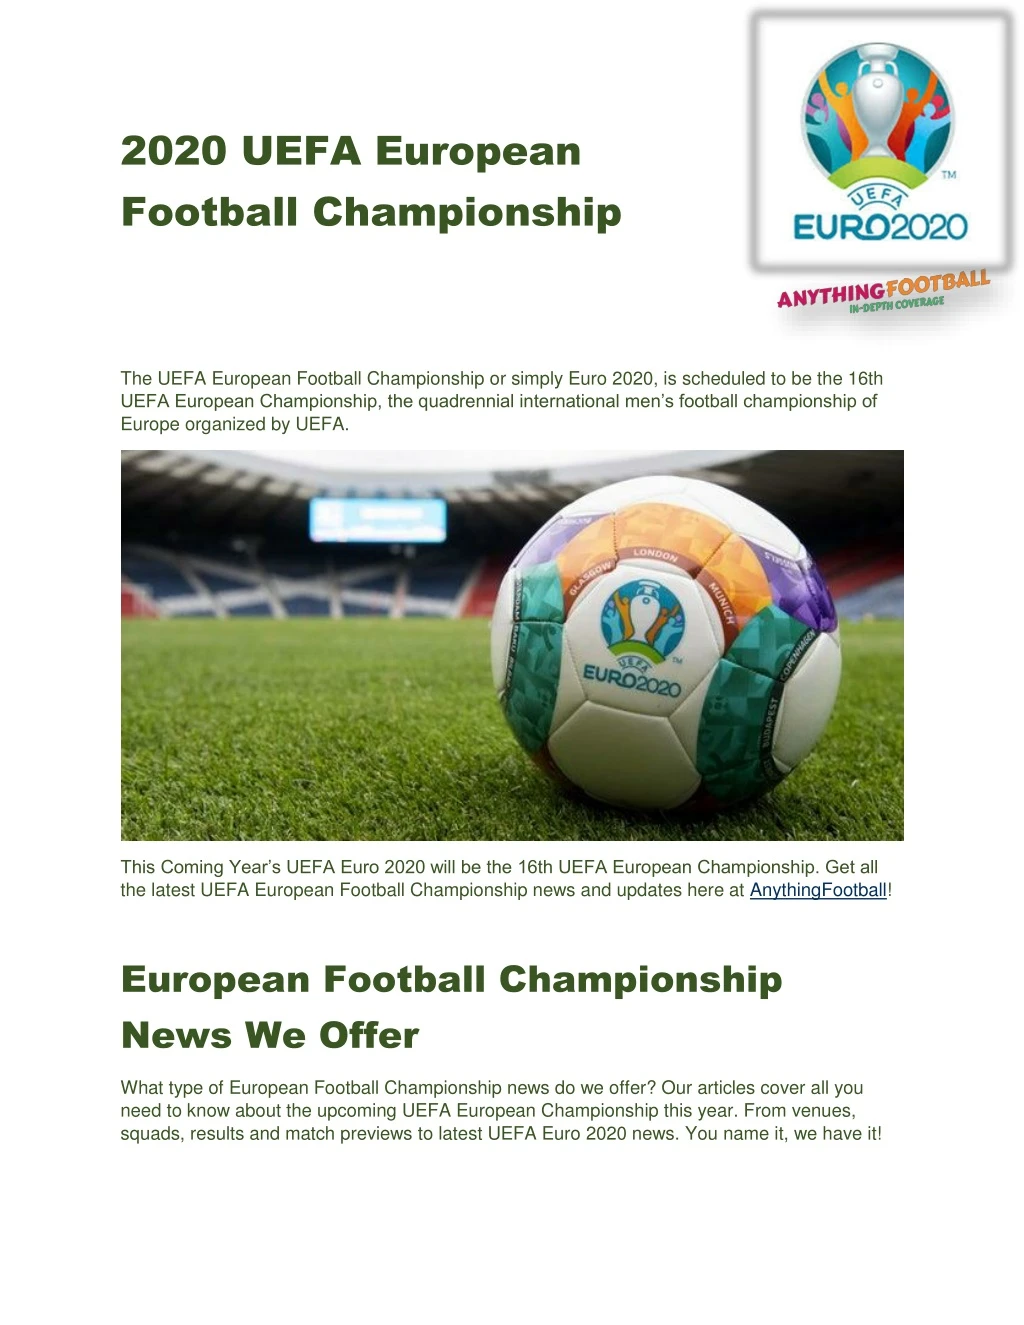 2020 uefa european football championship